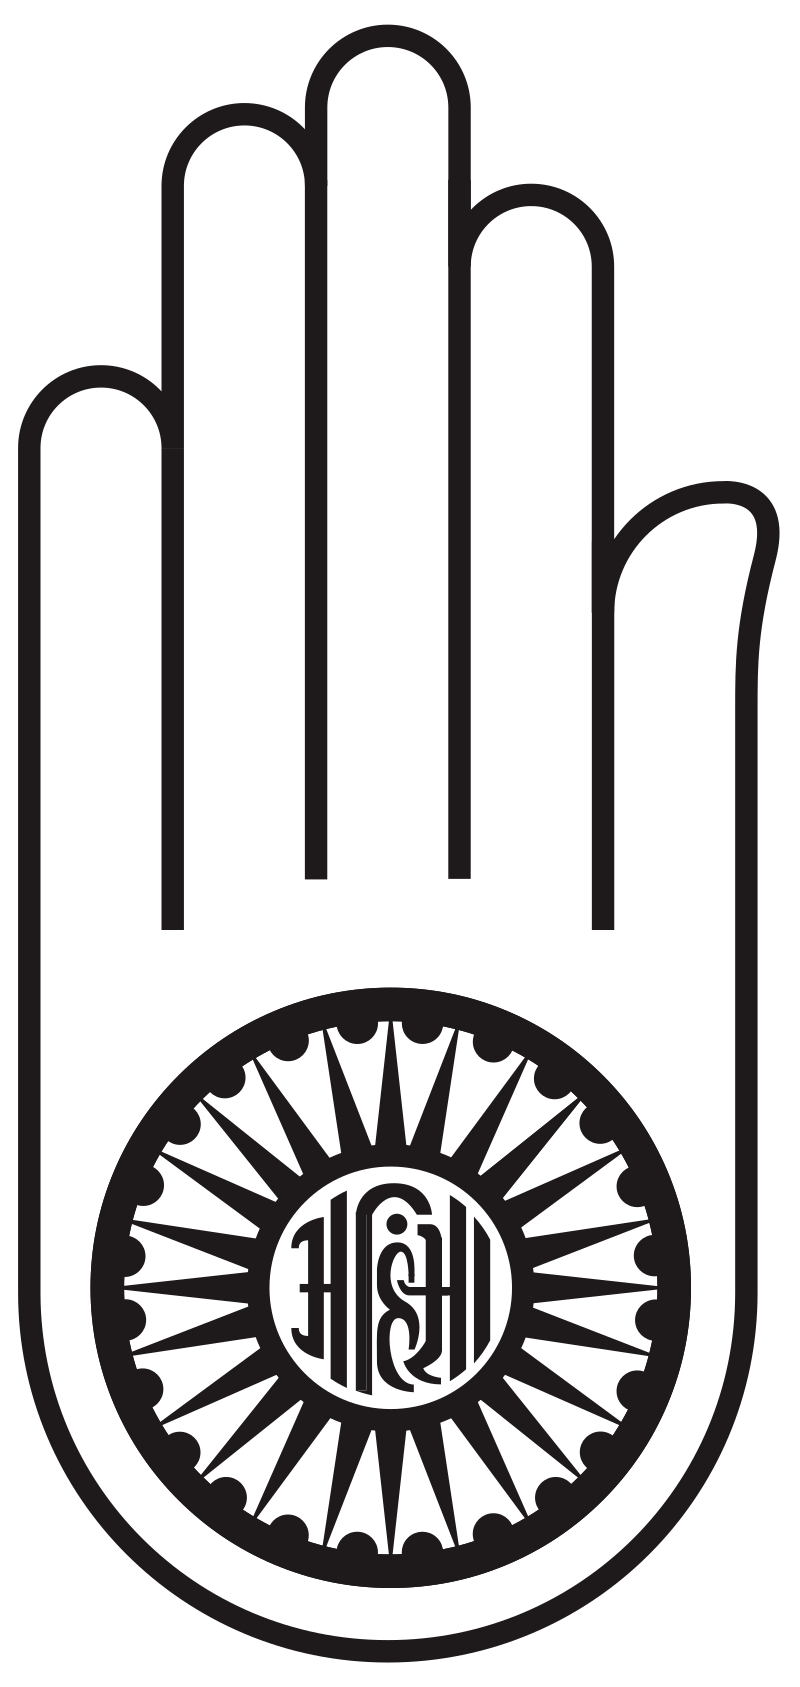 Jainism Symbol Hand Free Download Image PNG Image